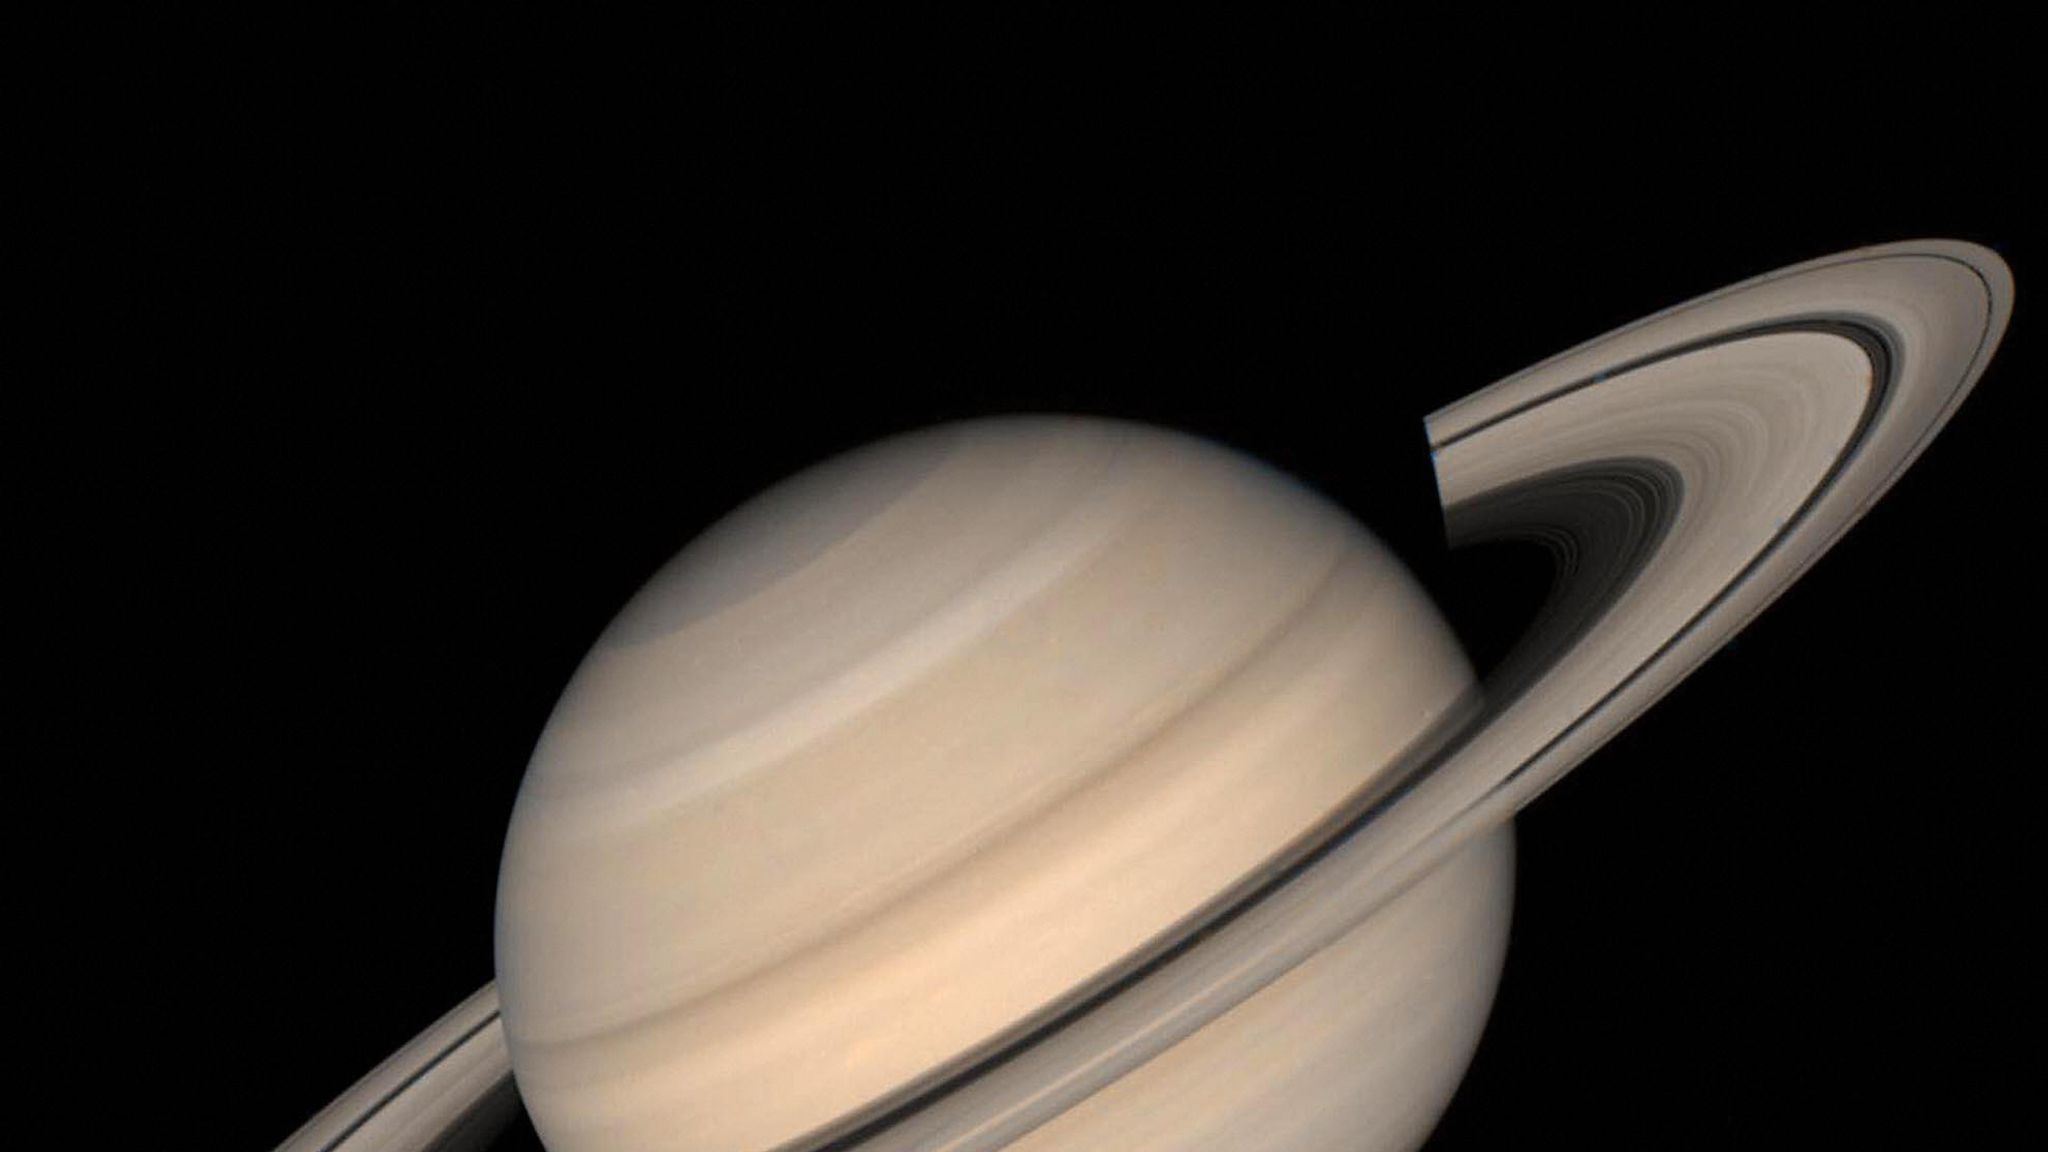 Explained: Are Saturn's rings vanishing?